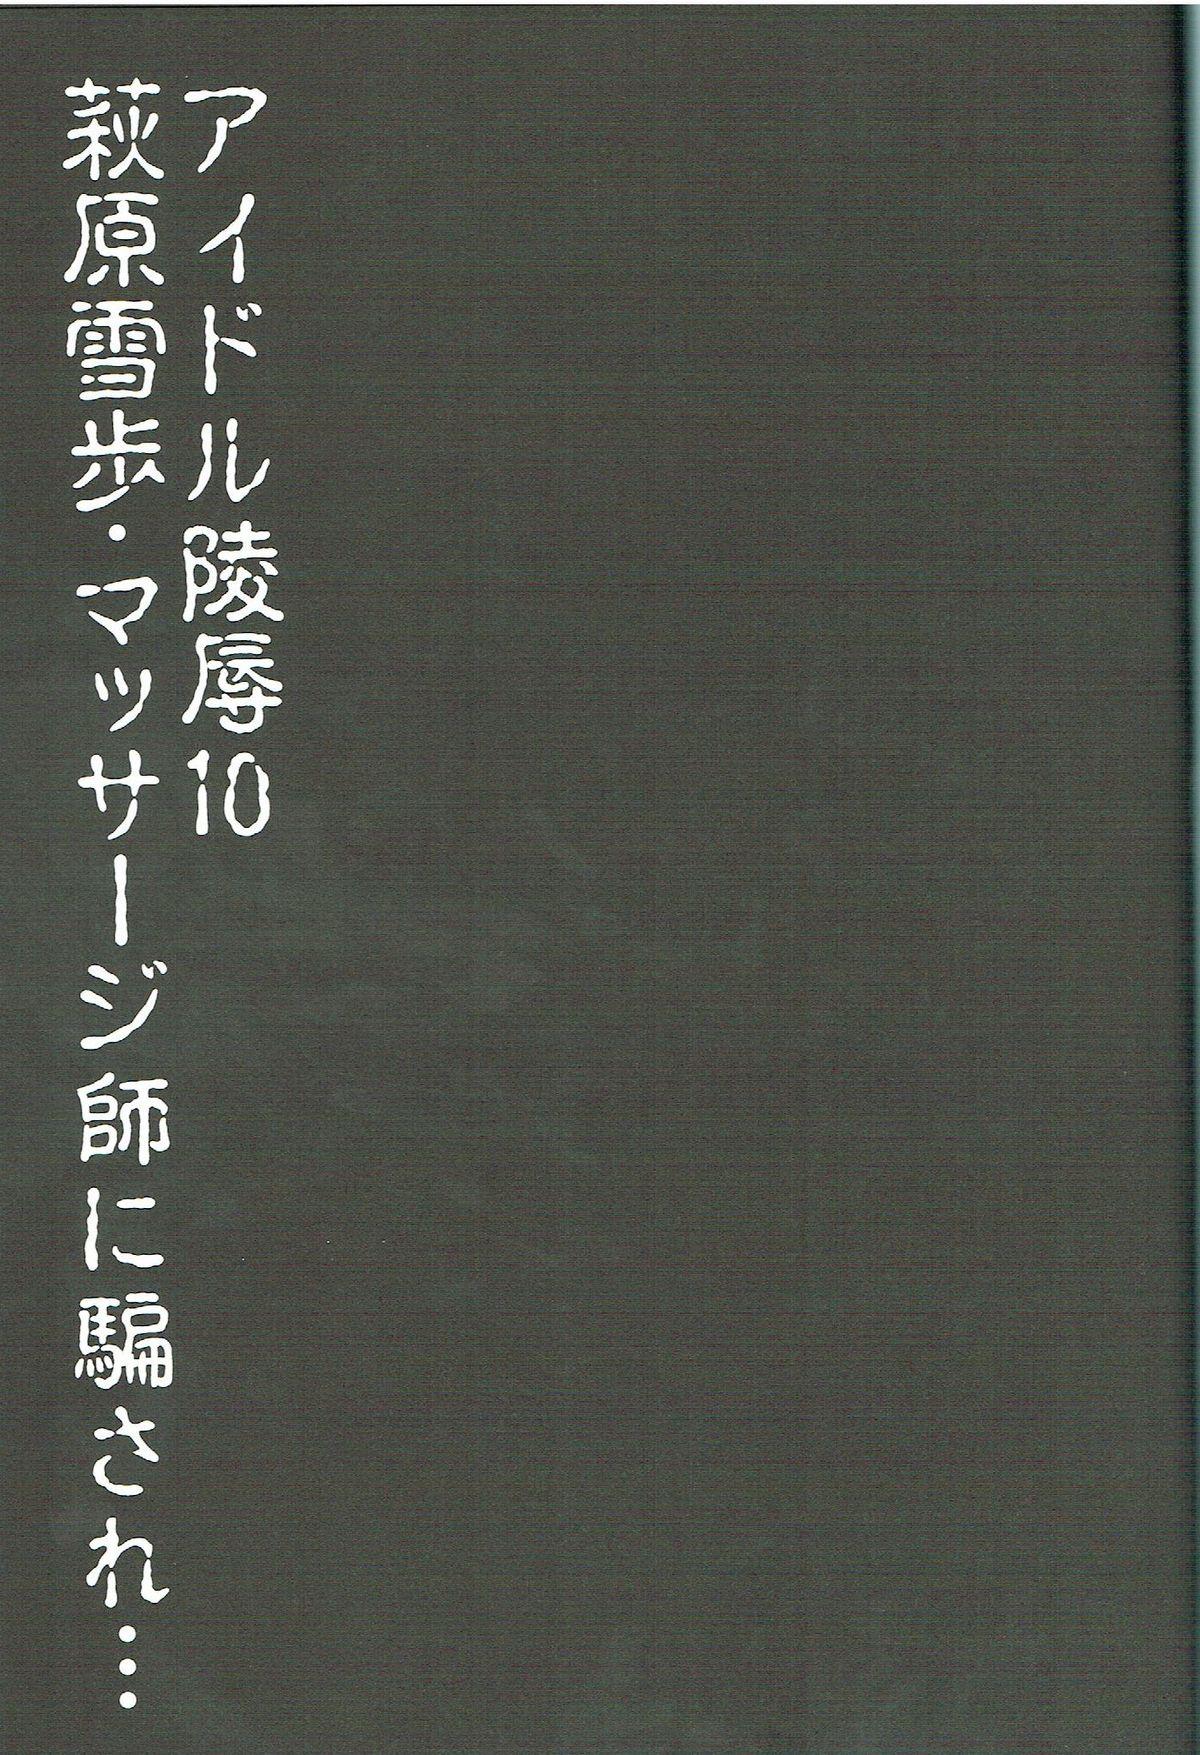 Idol Ryoujoku 10 Hagiwara Yukiho Massage-shi ni Damasare... 1